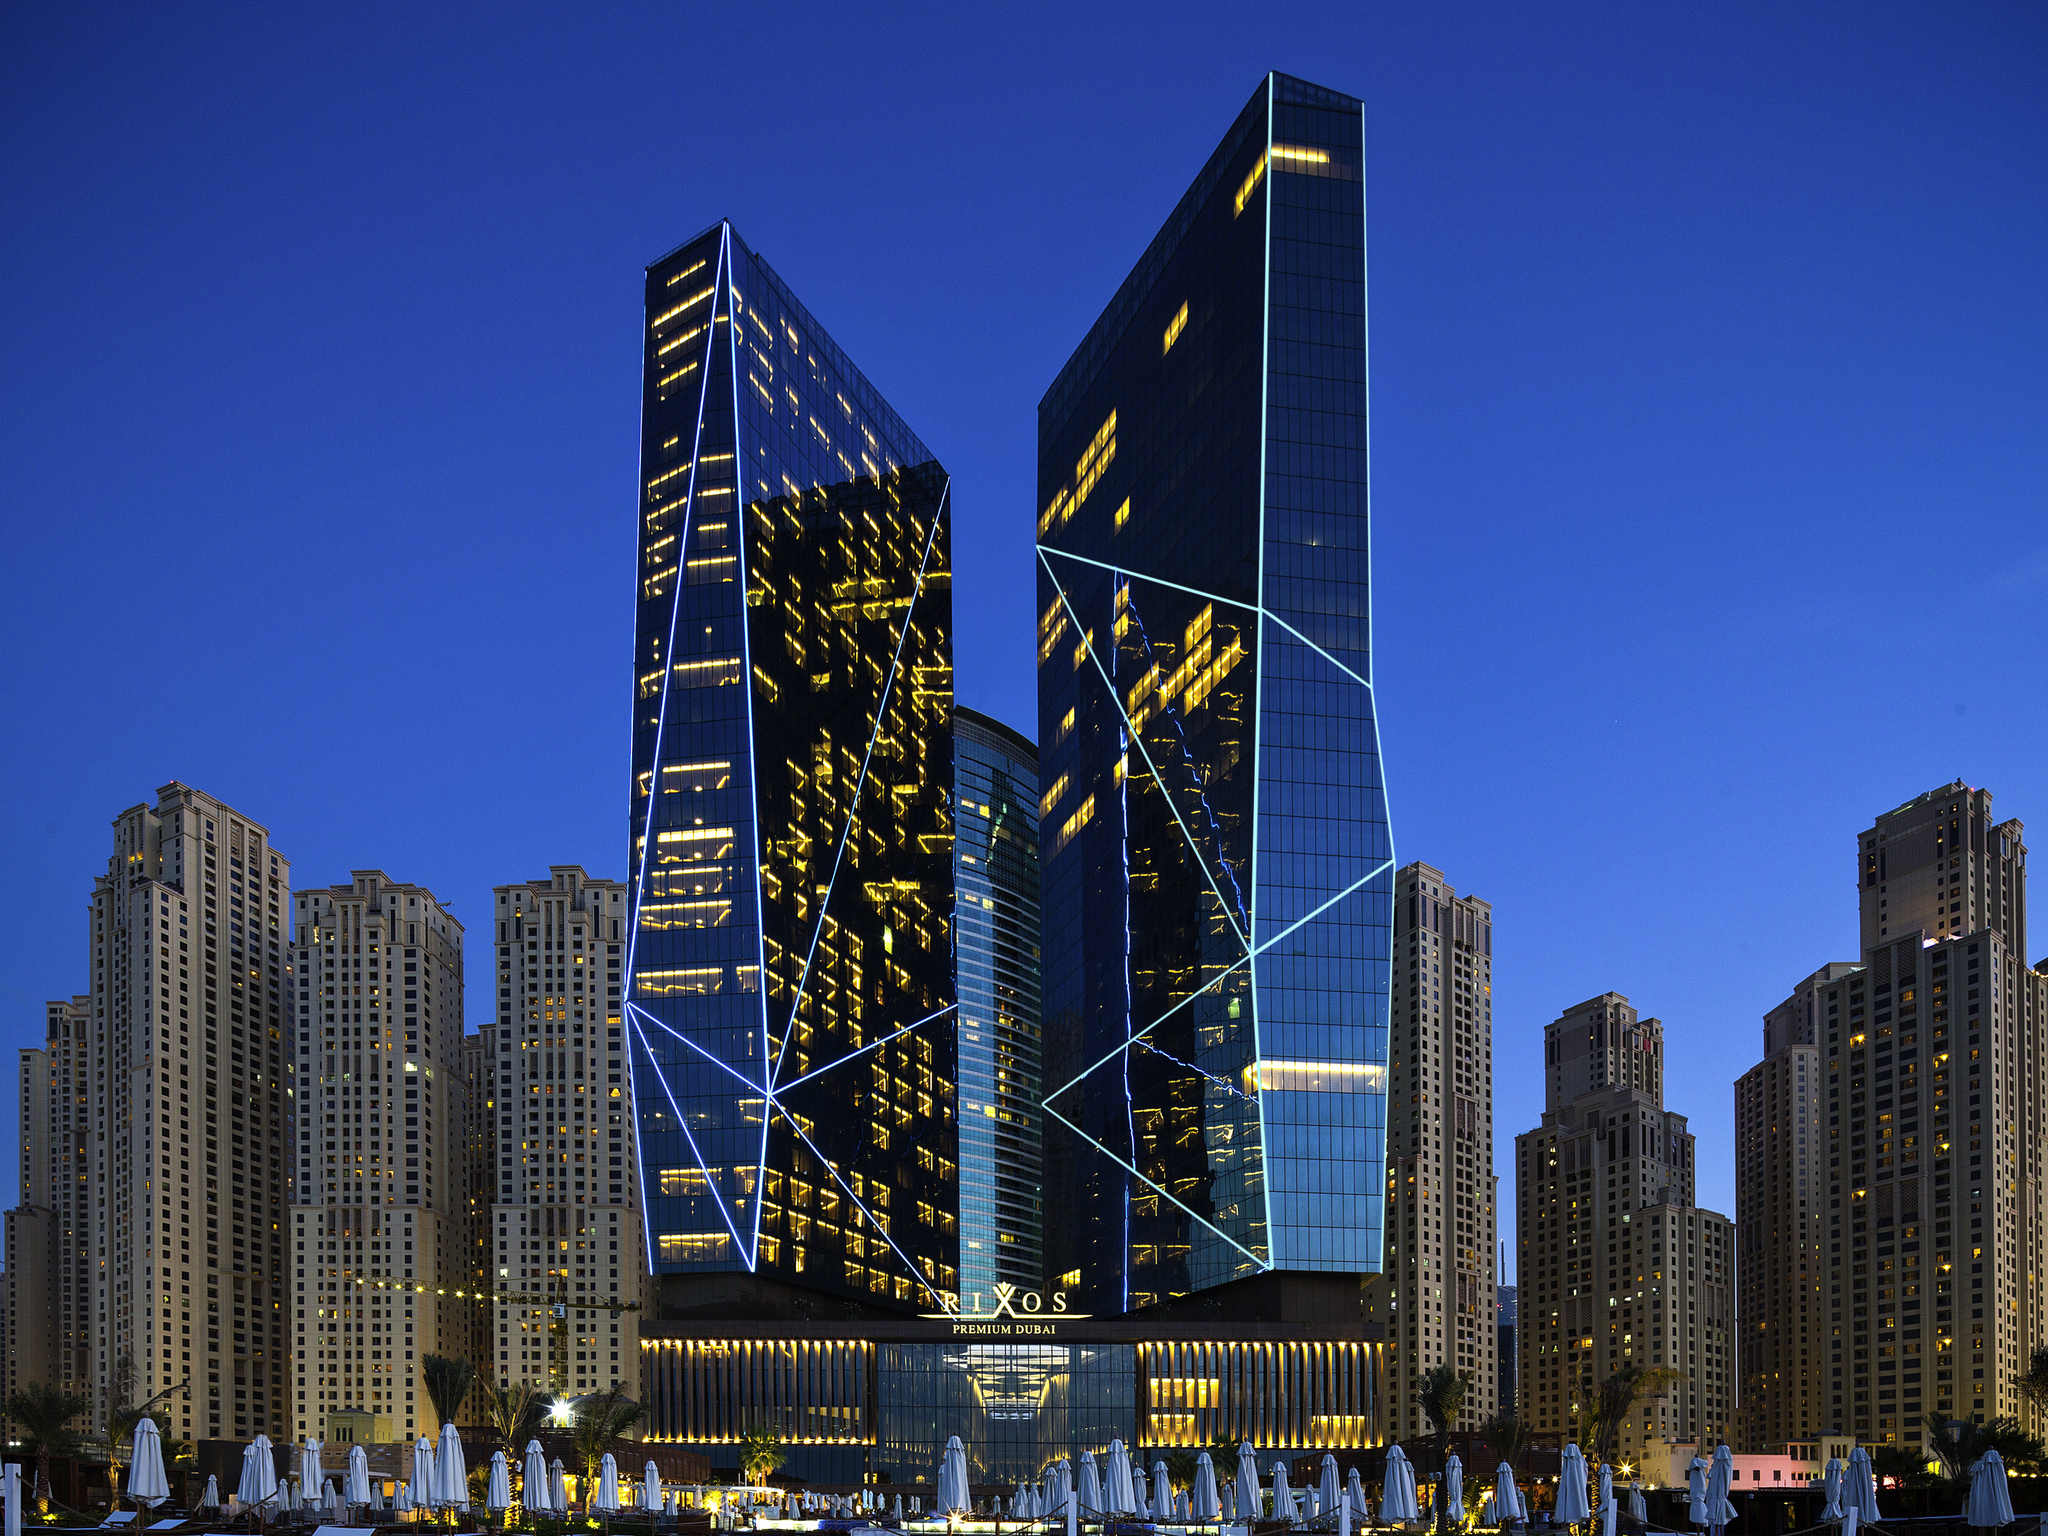 Rixos hotel Dubai